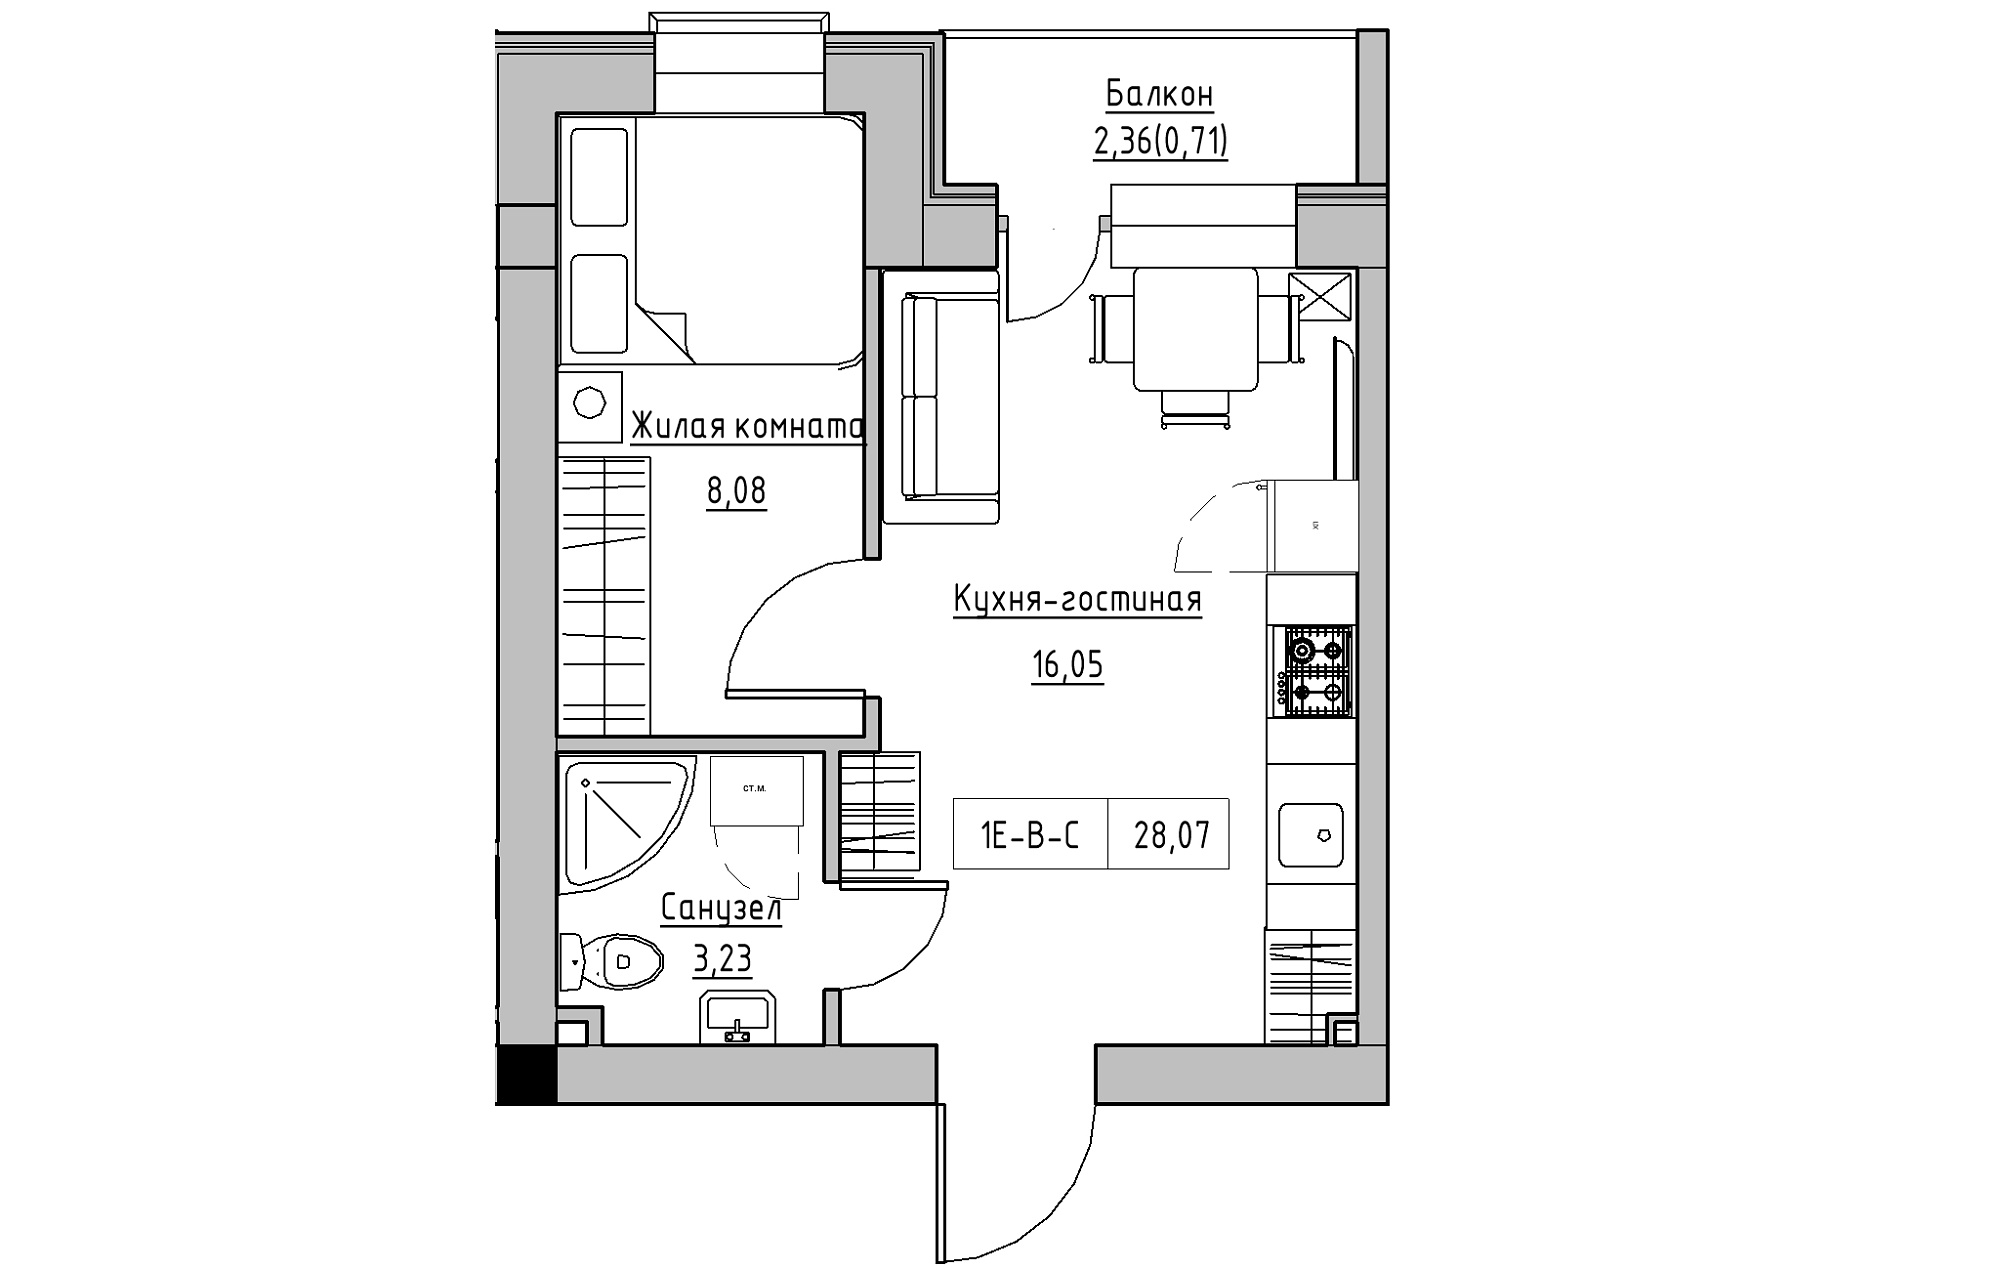 Planning 1-rm flats area 28.07m2, KS-018-05/0007.